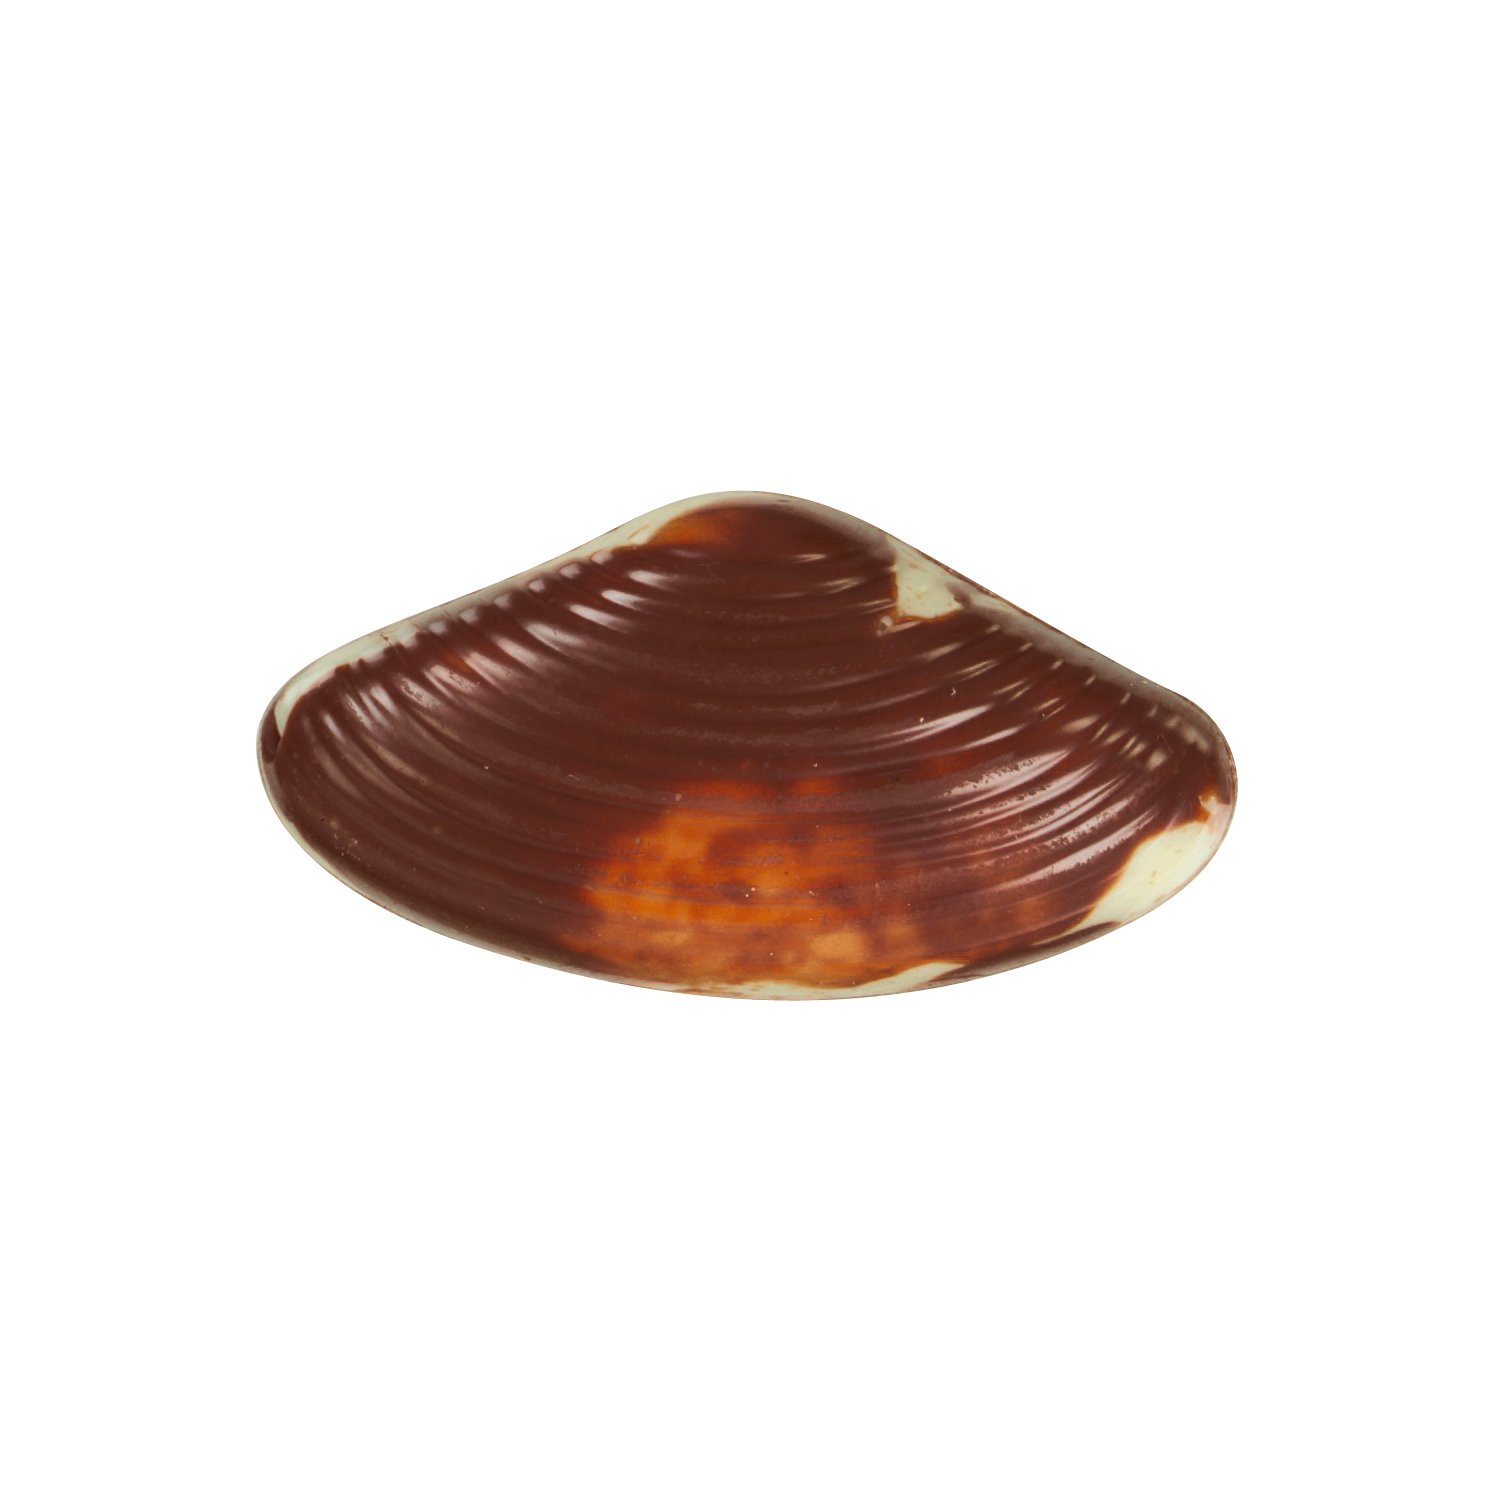 Seashells - Praline filled marbled seashells 12.5g - 14 trays - 3.5kg